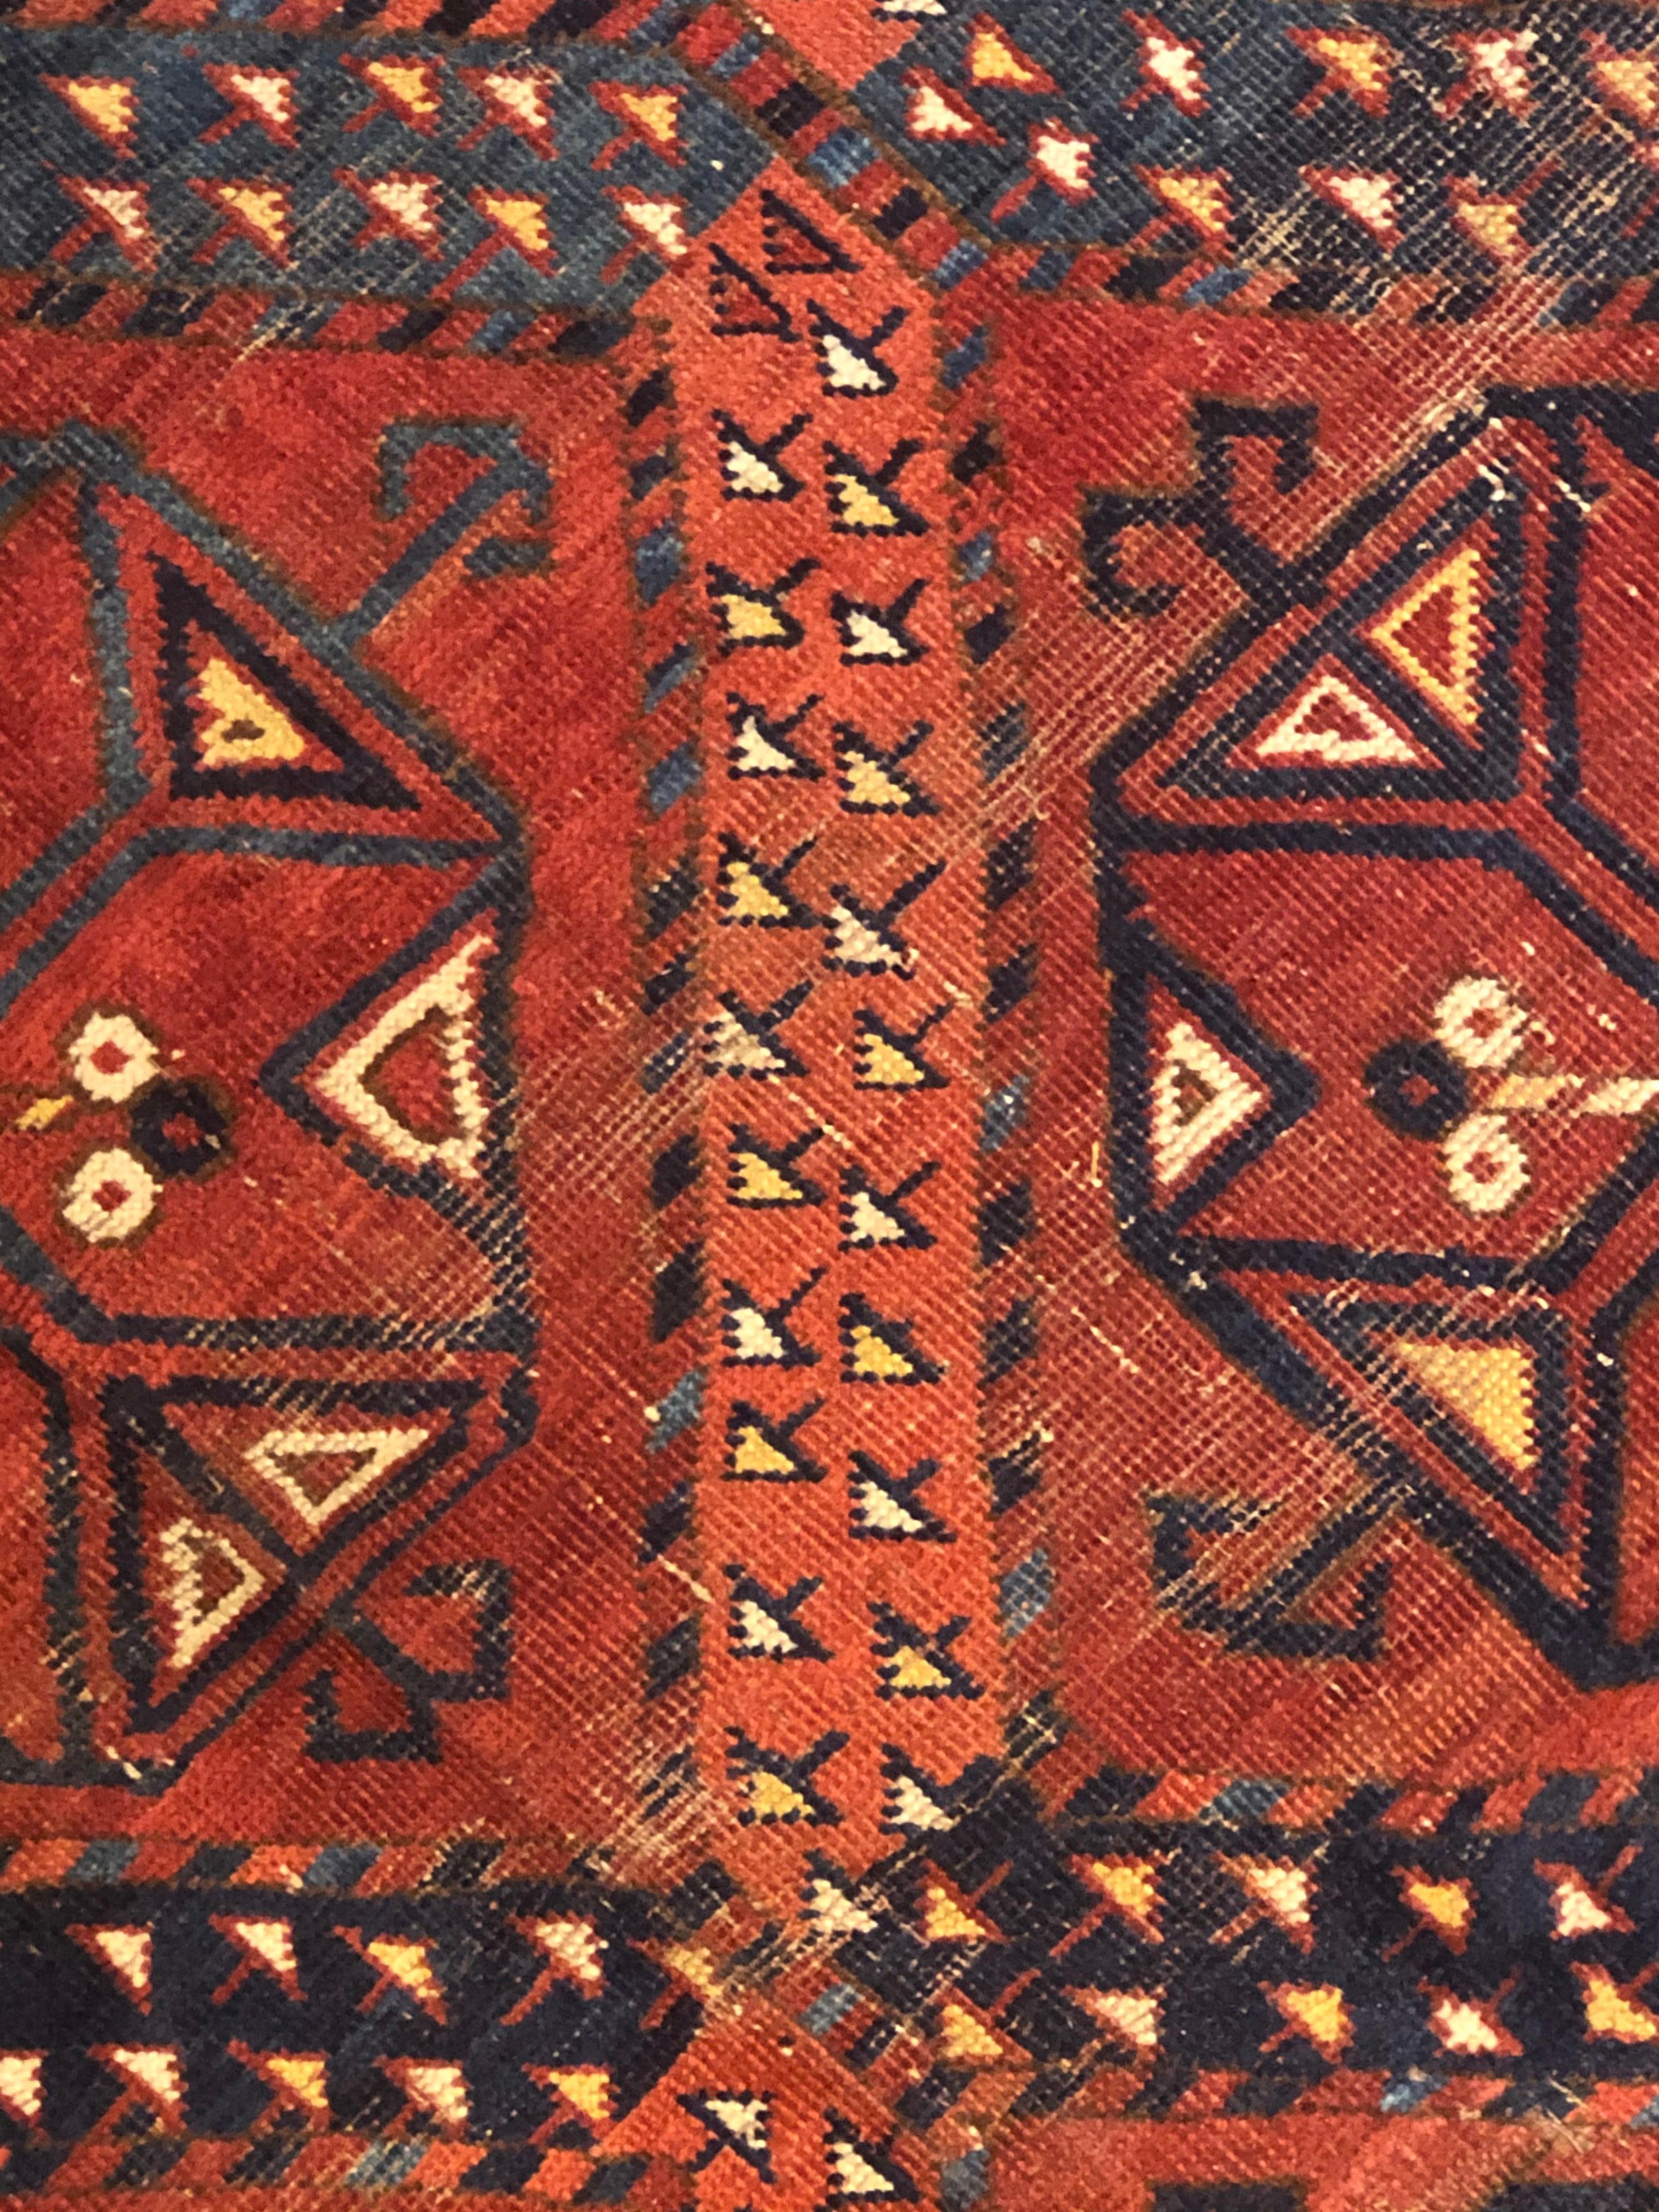 19th Century Antique Red Geometric Turkmen Erzari Rug € 9, 000, ca 1870 For Sale 6